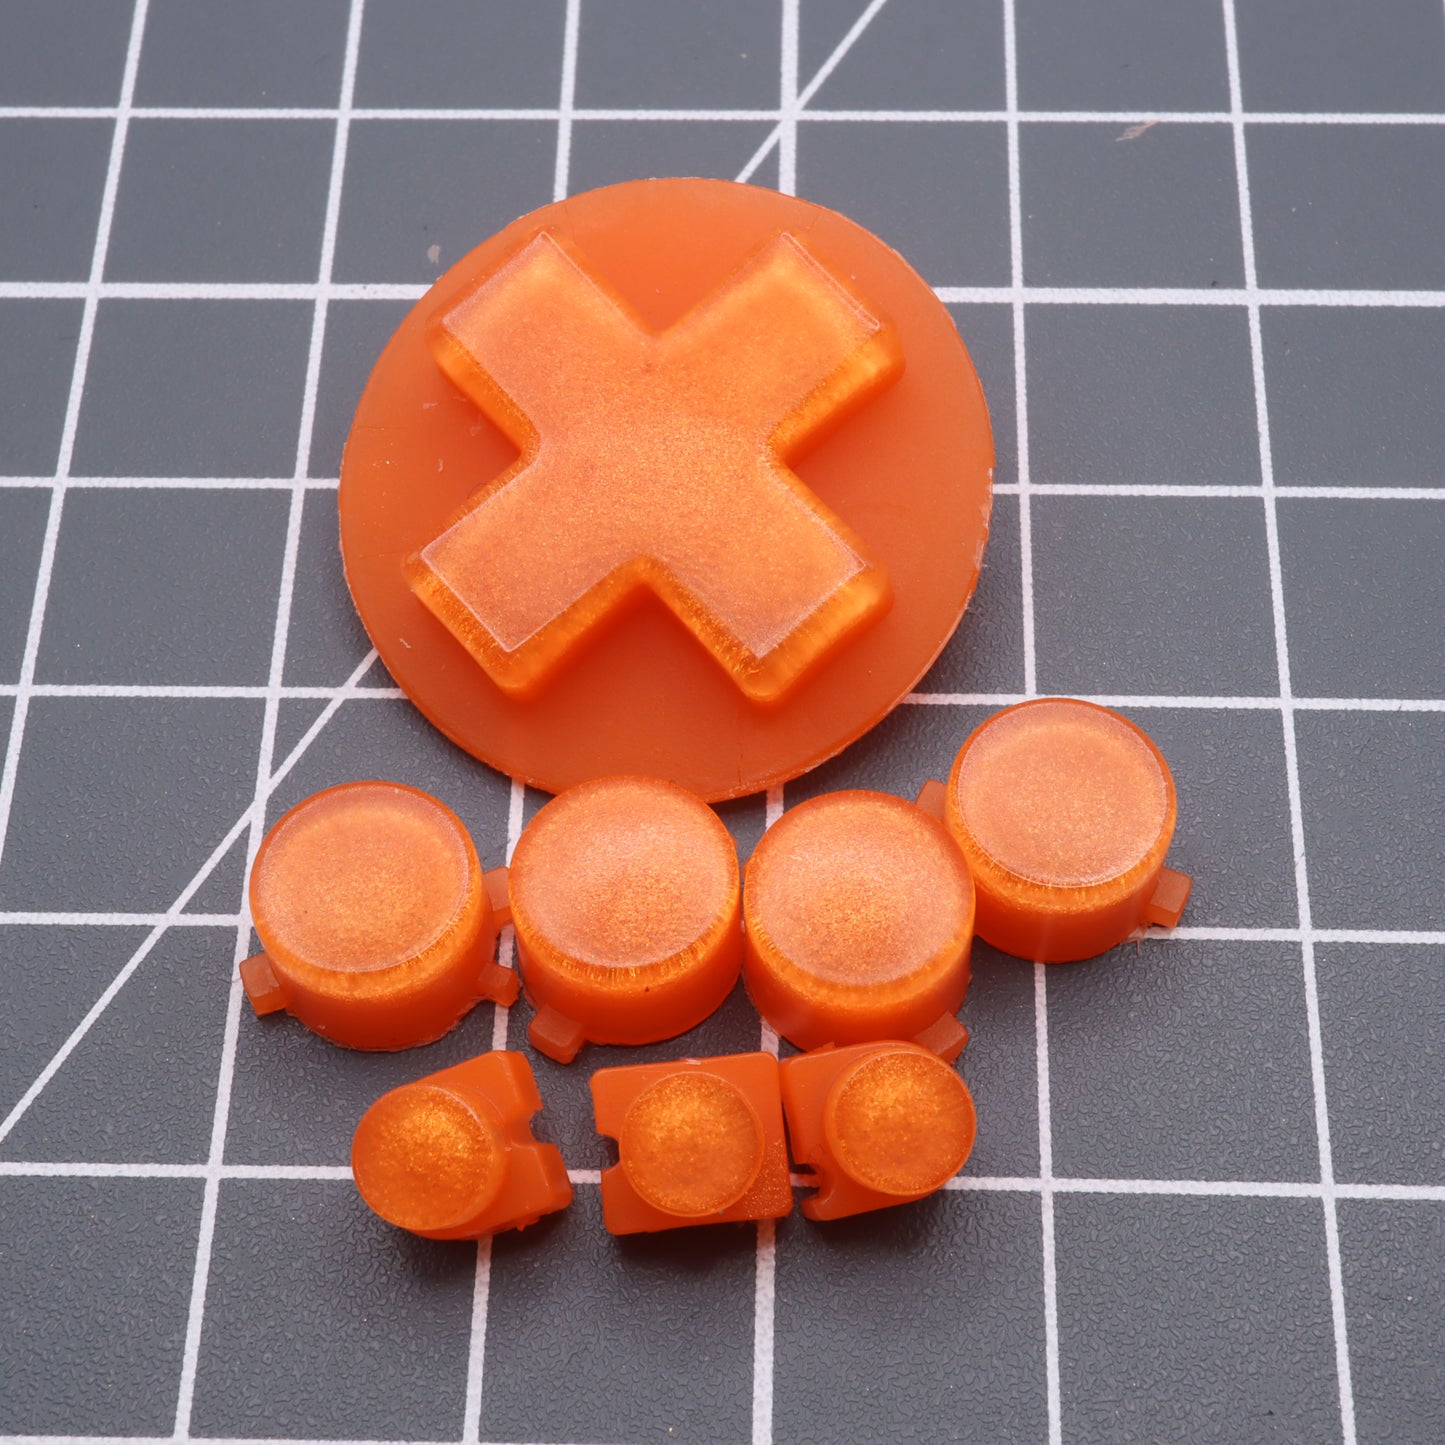 Analogue Pocket - Custom Button - Orange Candy